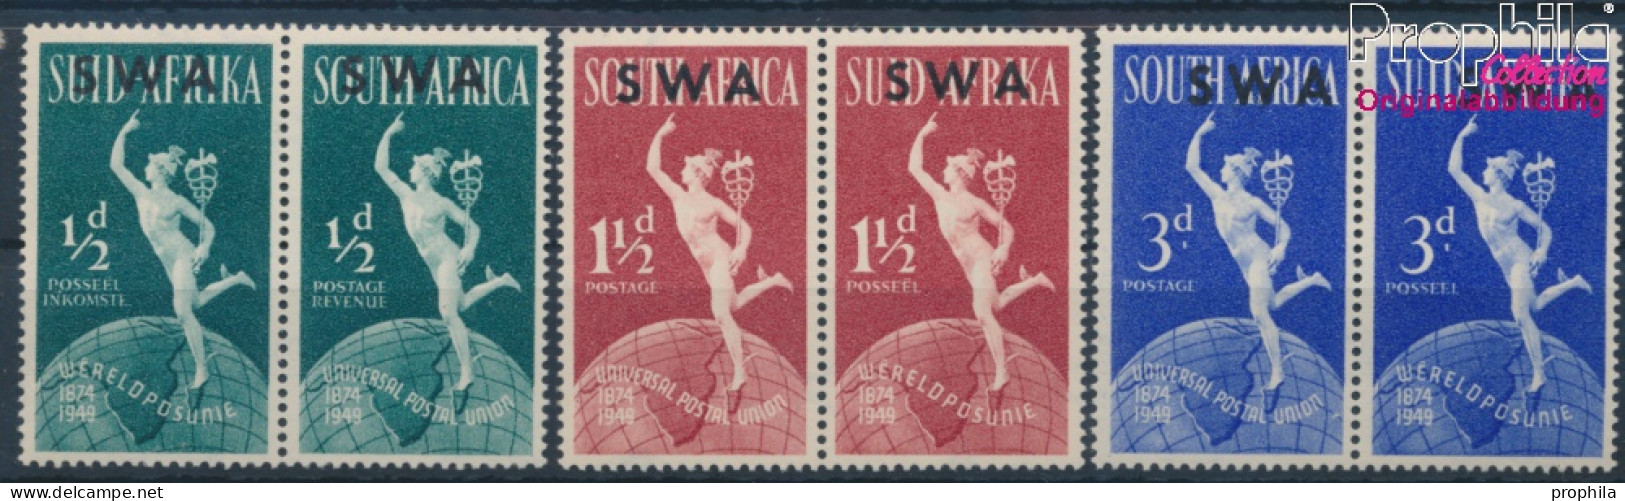 Namibia - Südwestafrika 260-265 Waagerechte Paare (kompl.Ausg.) Postfrisch 1949 Weltpostverein UPU (10363539 - Namibia (1990- ...)